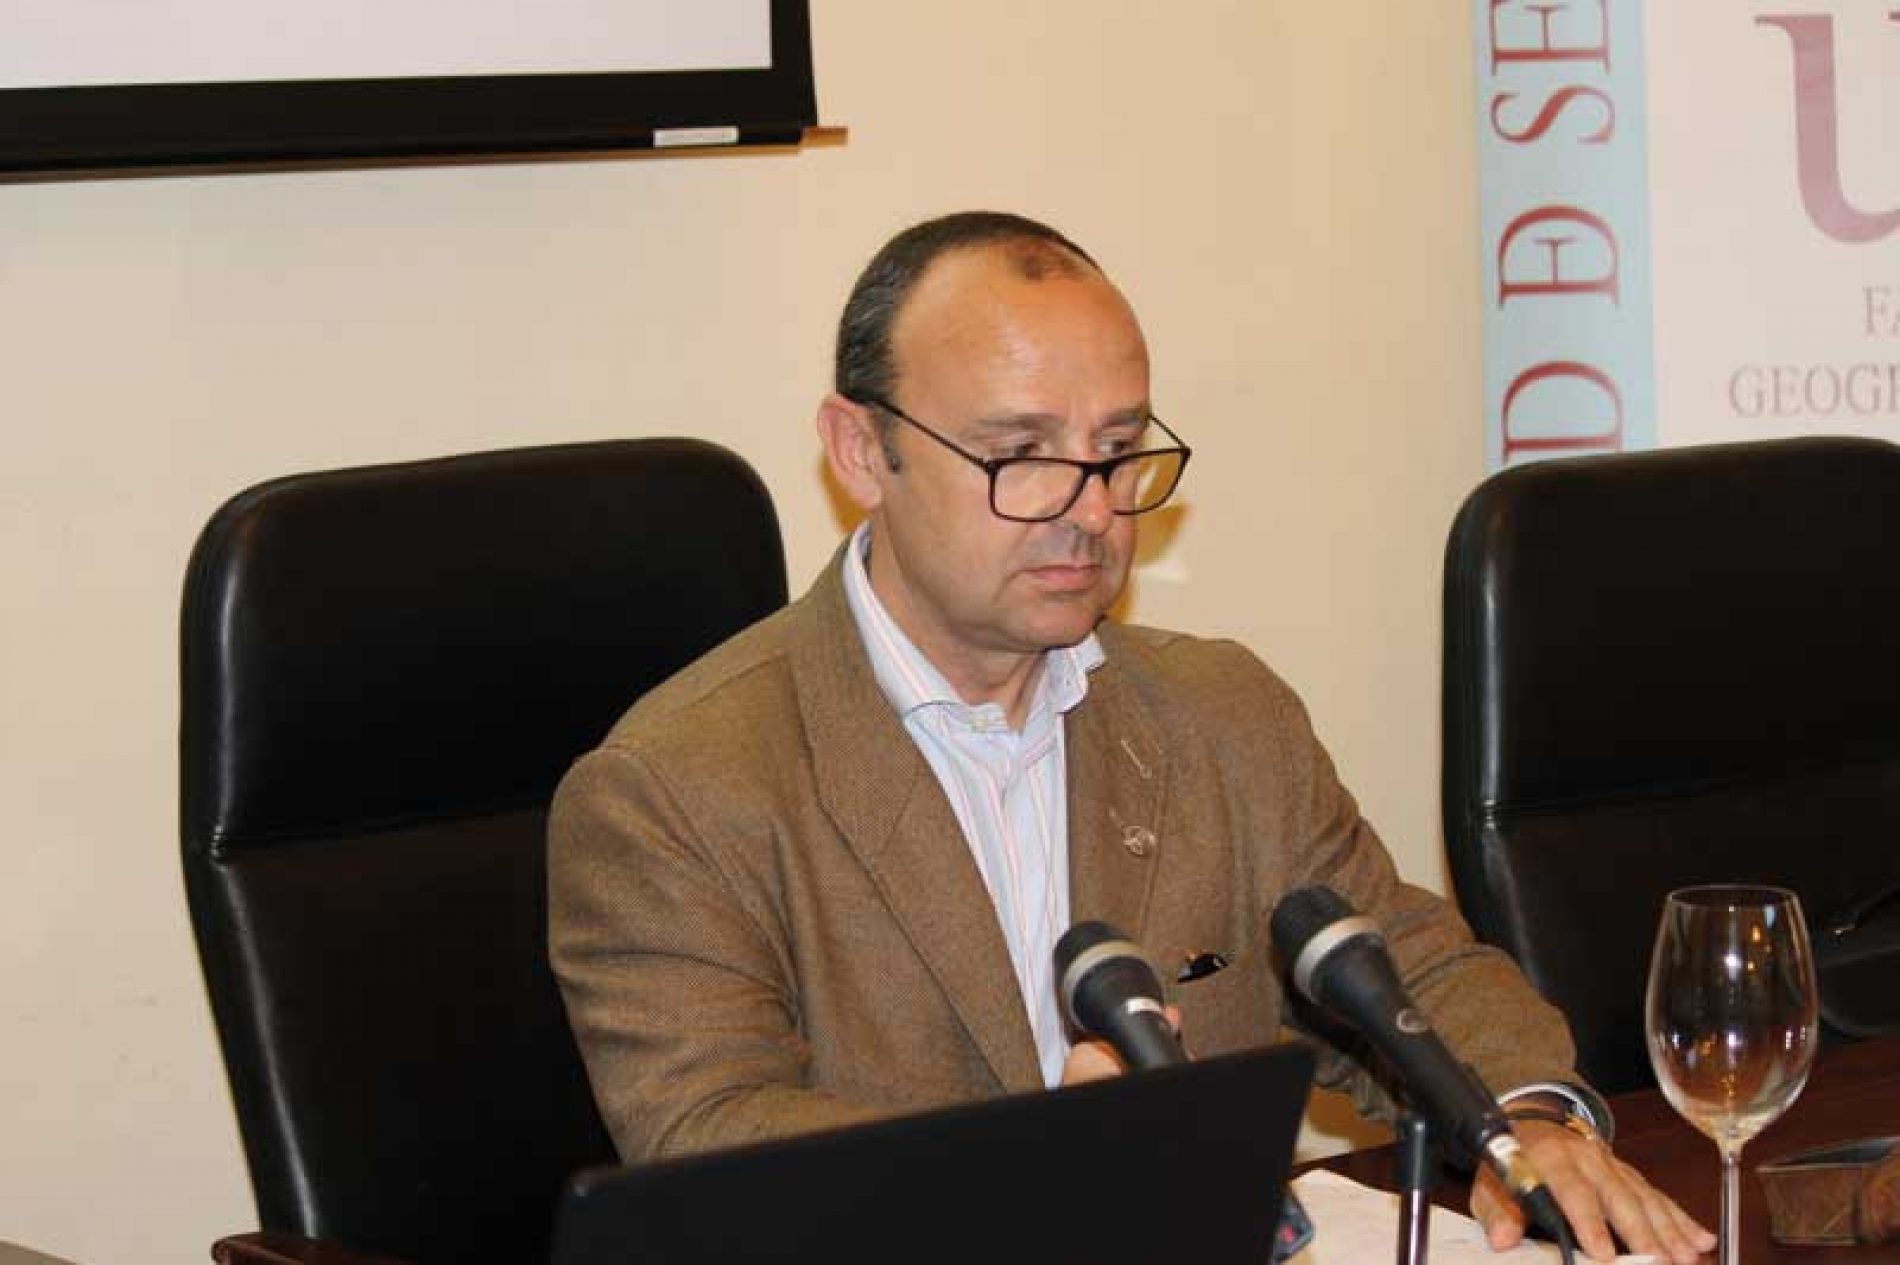 Entrevista a Alfonso Aguado Puig, presidente de la Asociación Española de Rehalas